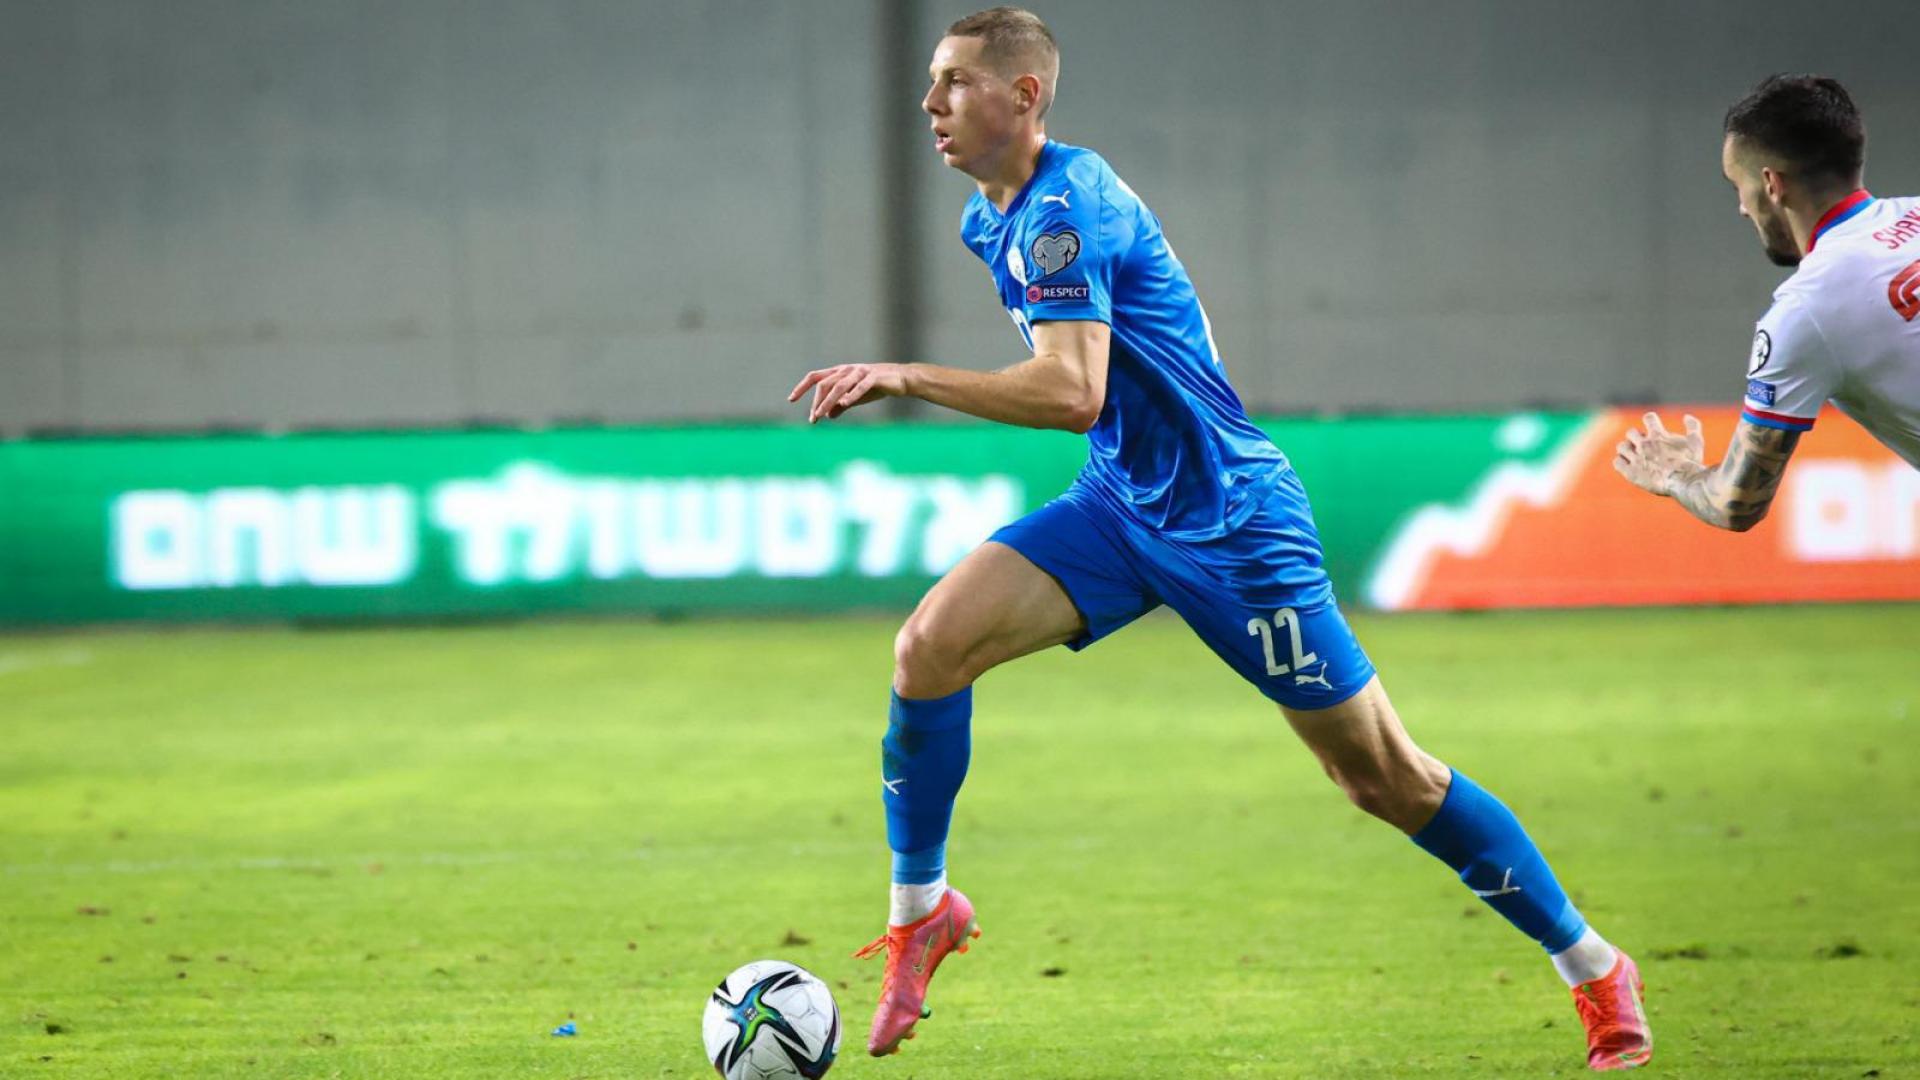 Nationals: first goal for Podgoreanu